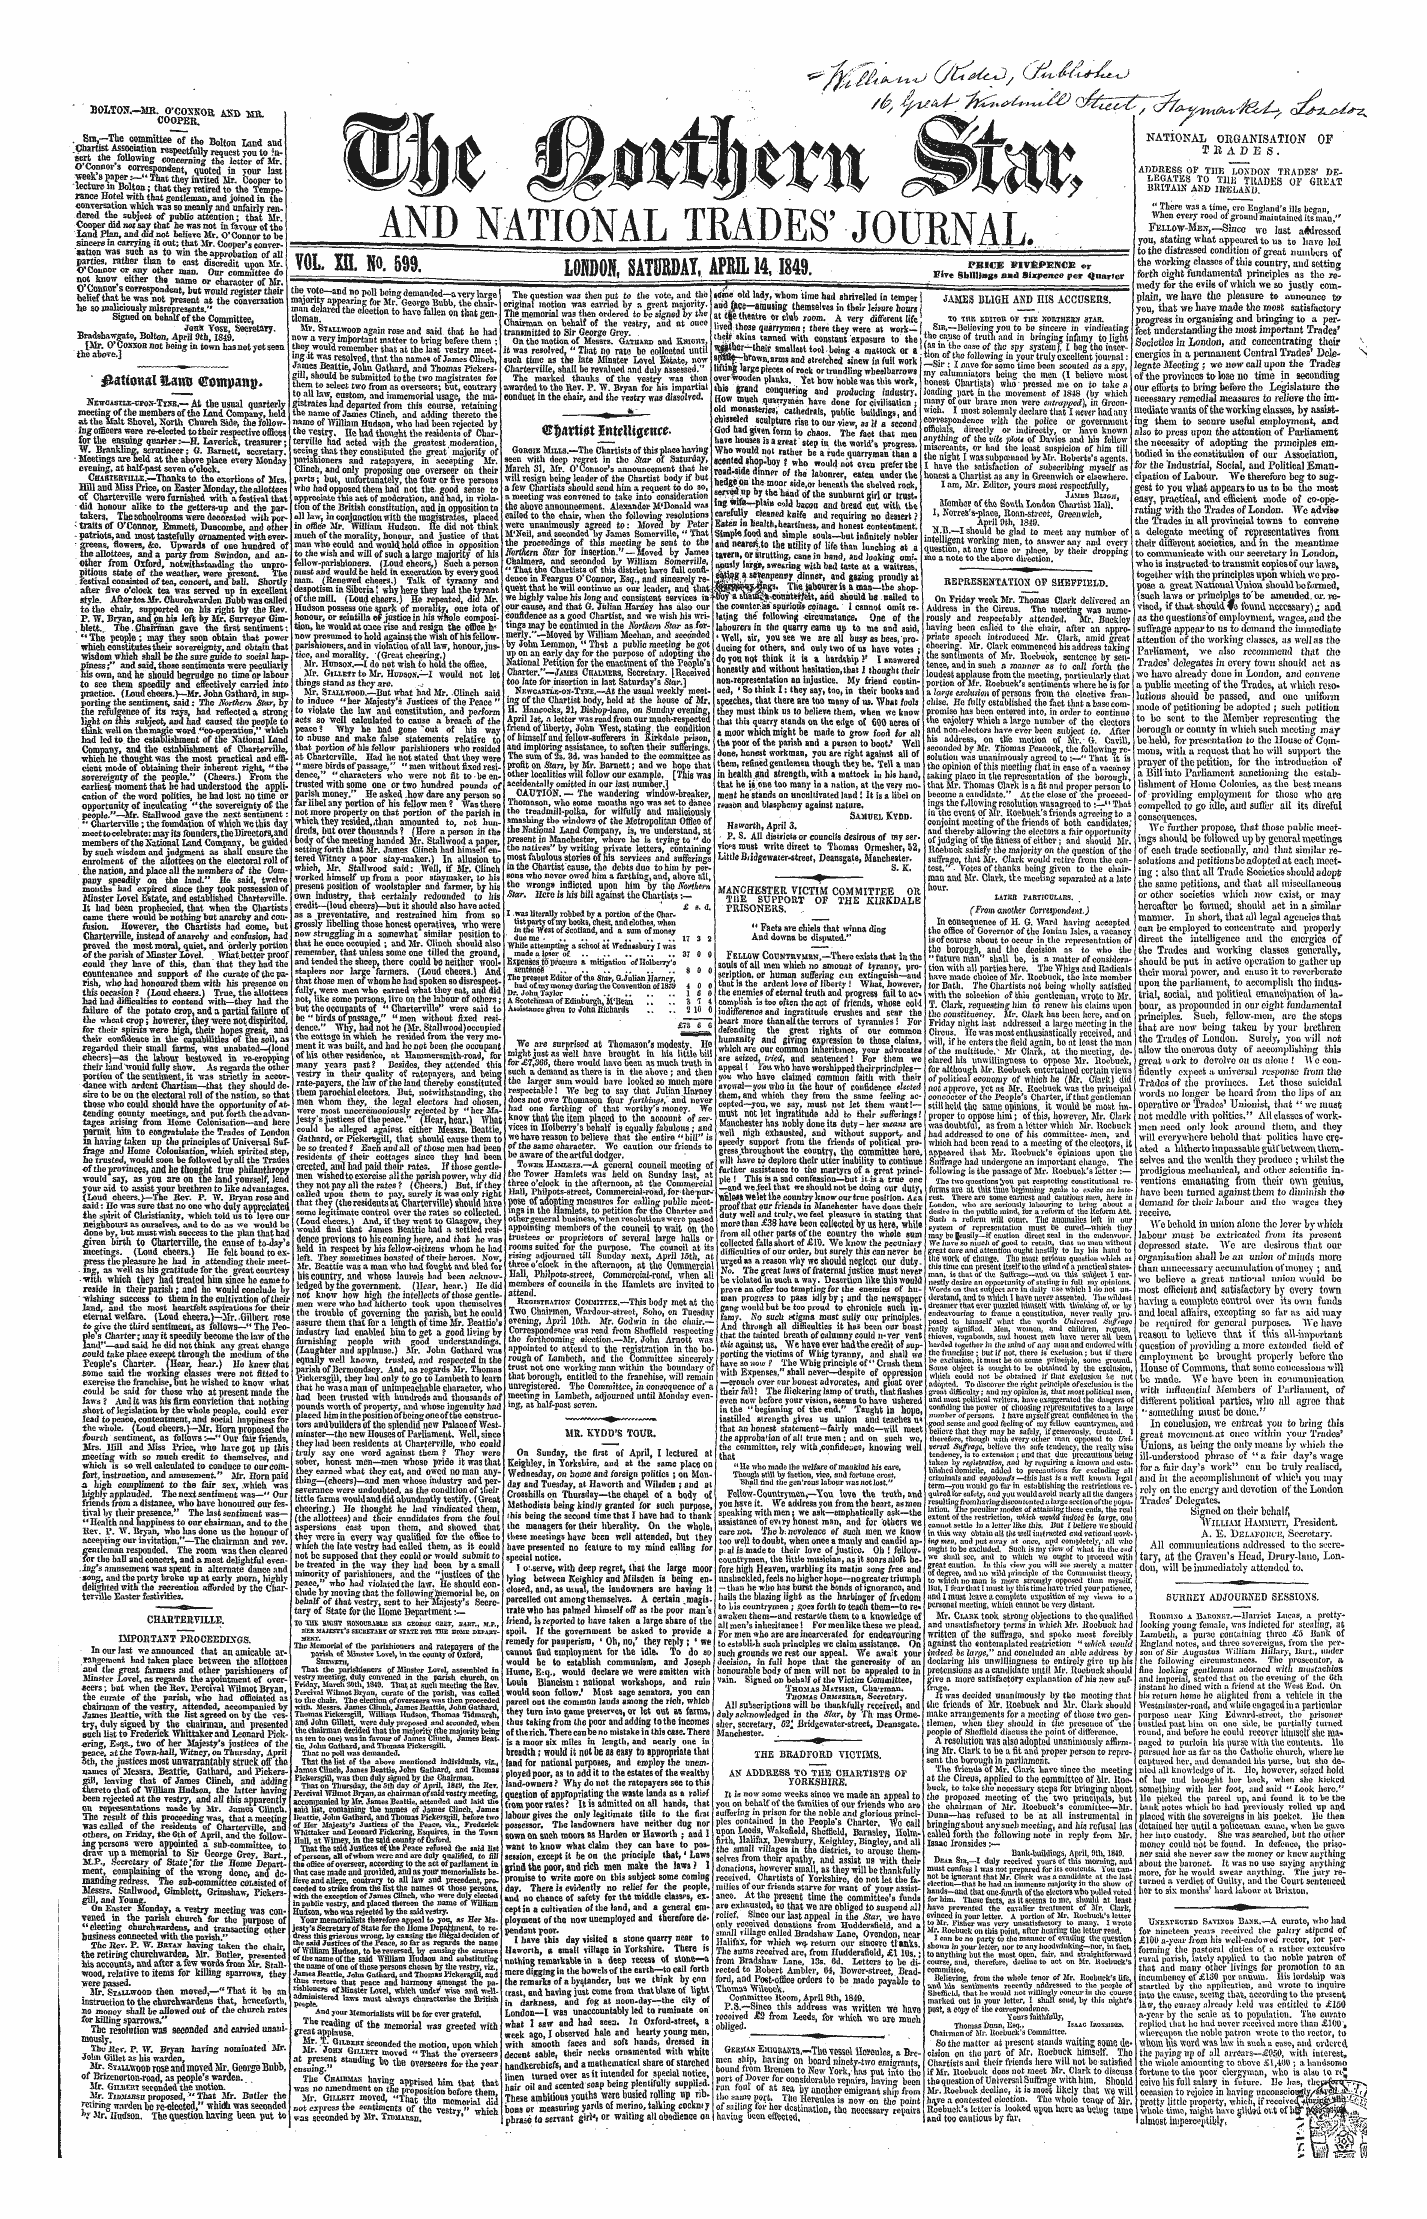 Northern Star (1837-1852): jS F Y, 1st edition - Ctatist Jtotelugencc